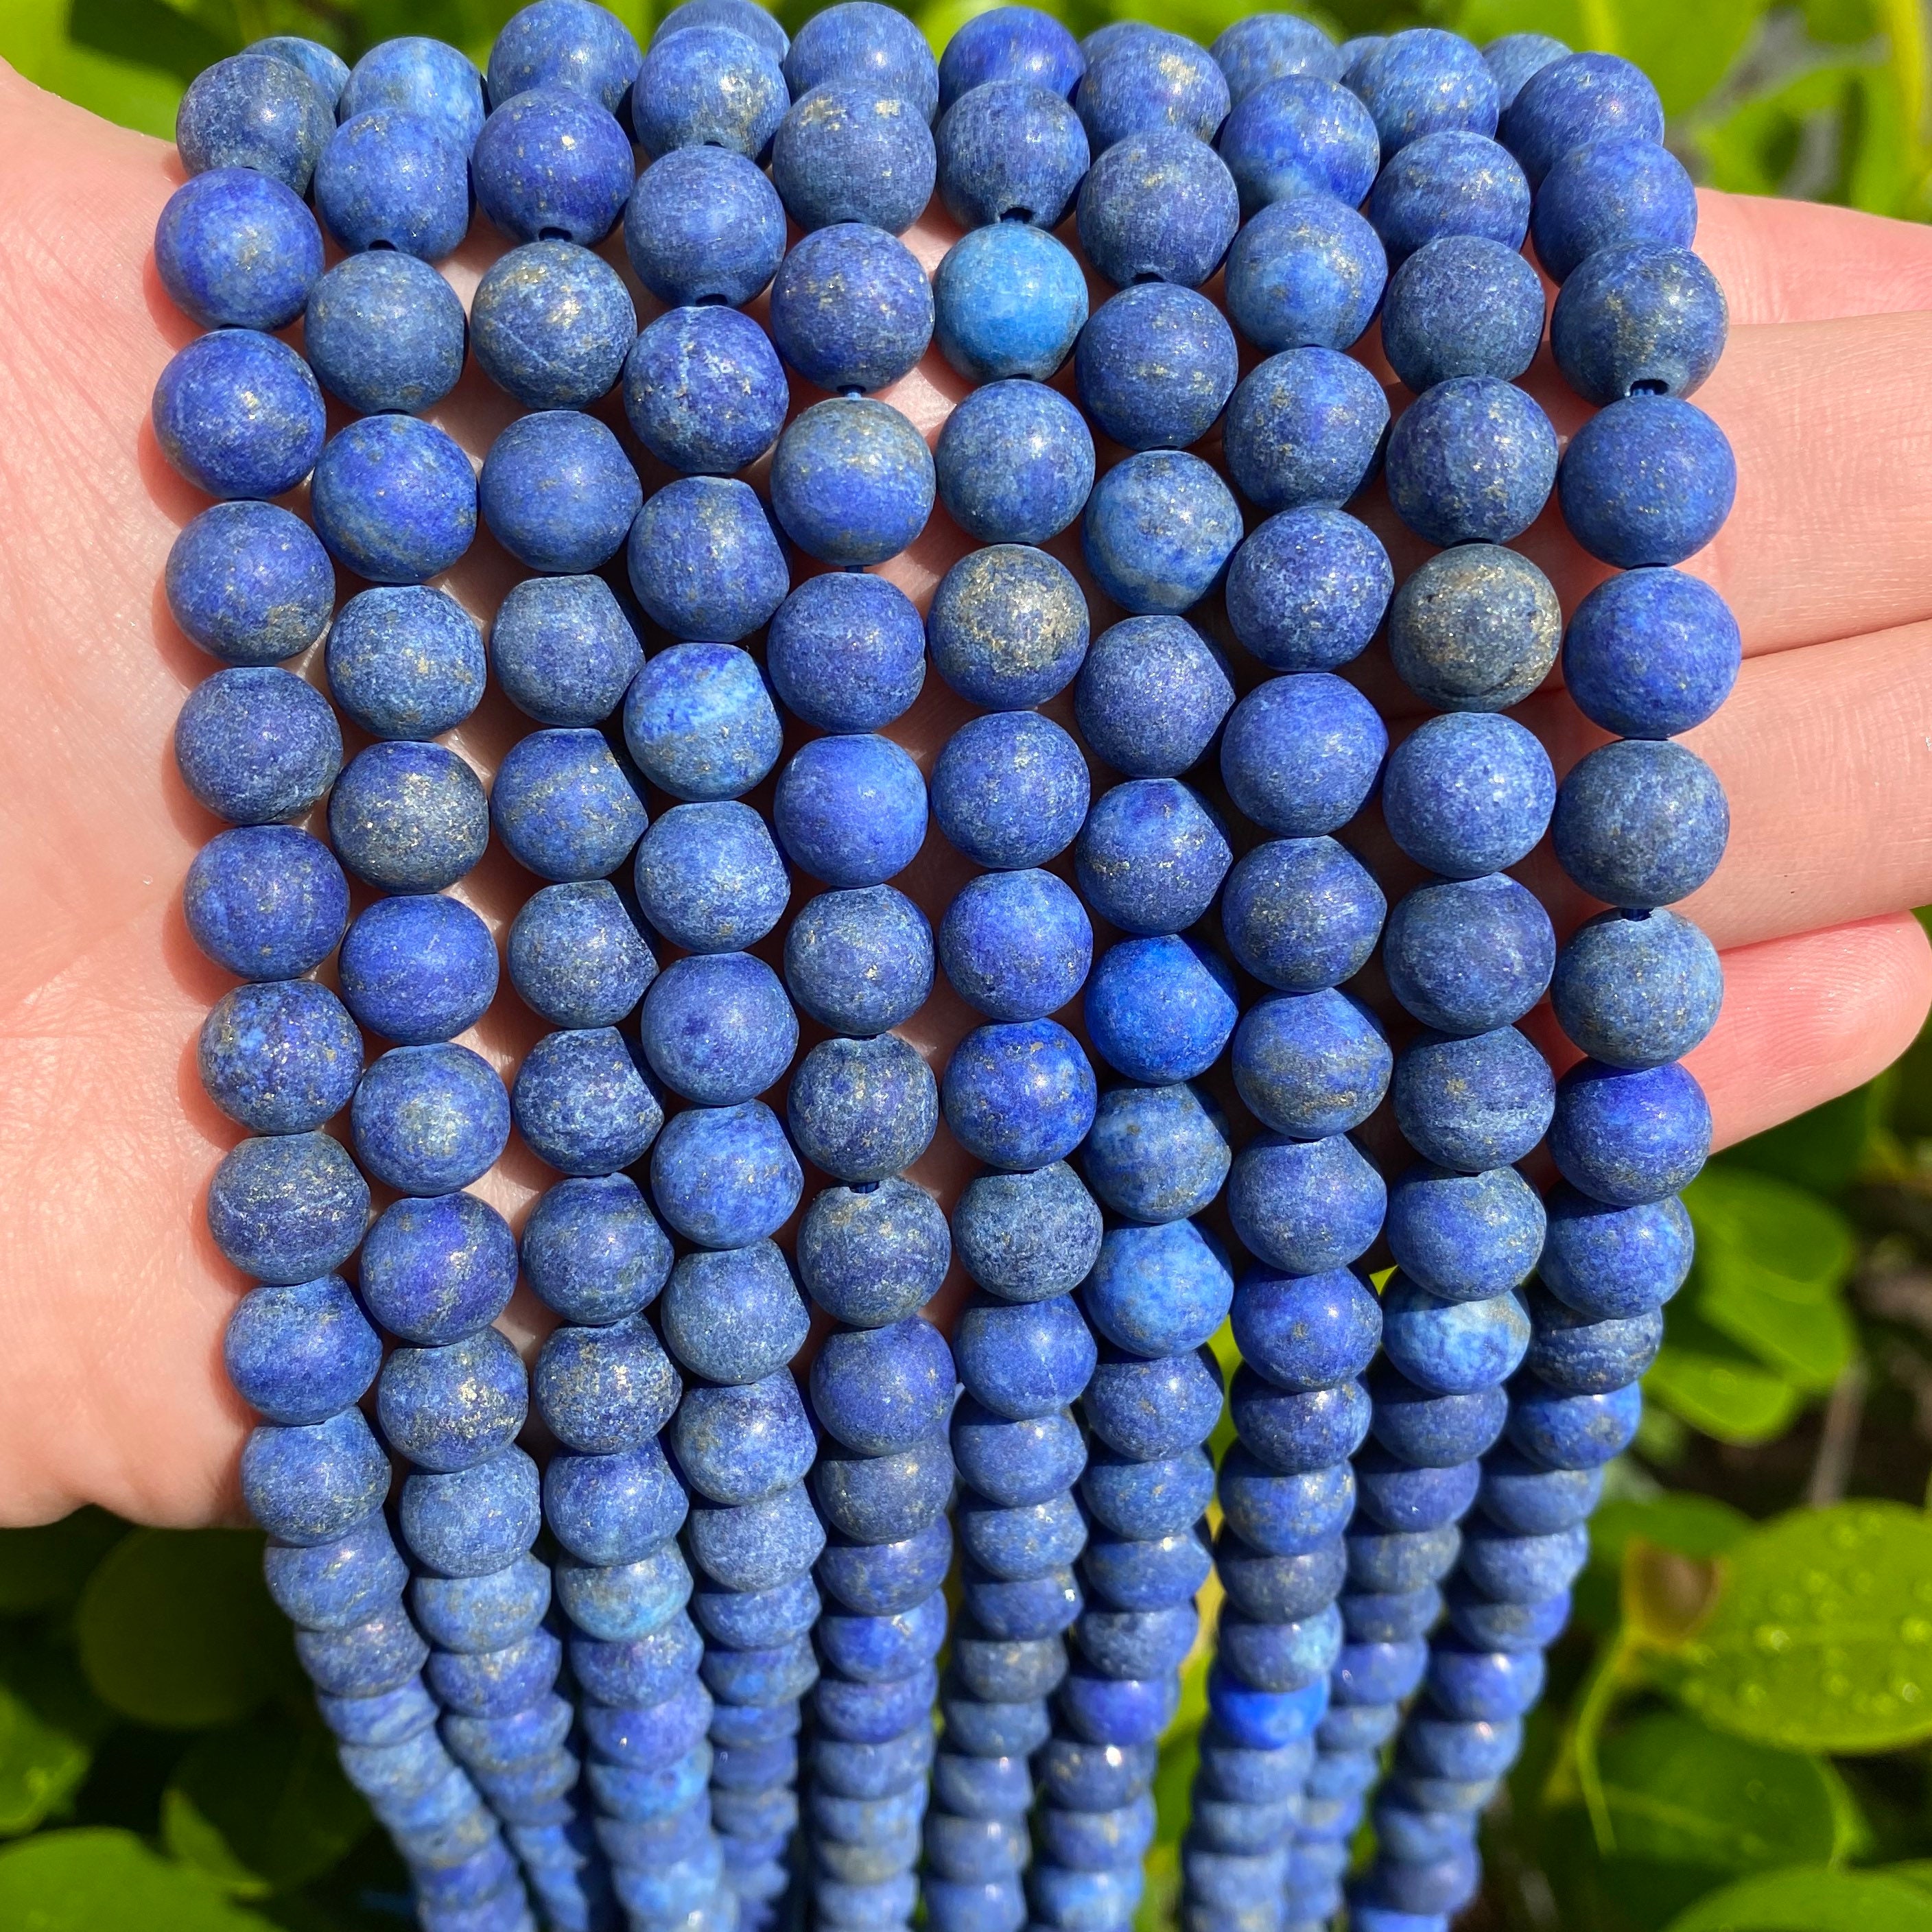 Natural Matte Blue Lapis Lazuli Gemstone Round Beads Grade A Sold